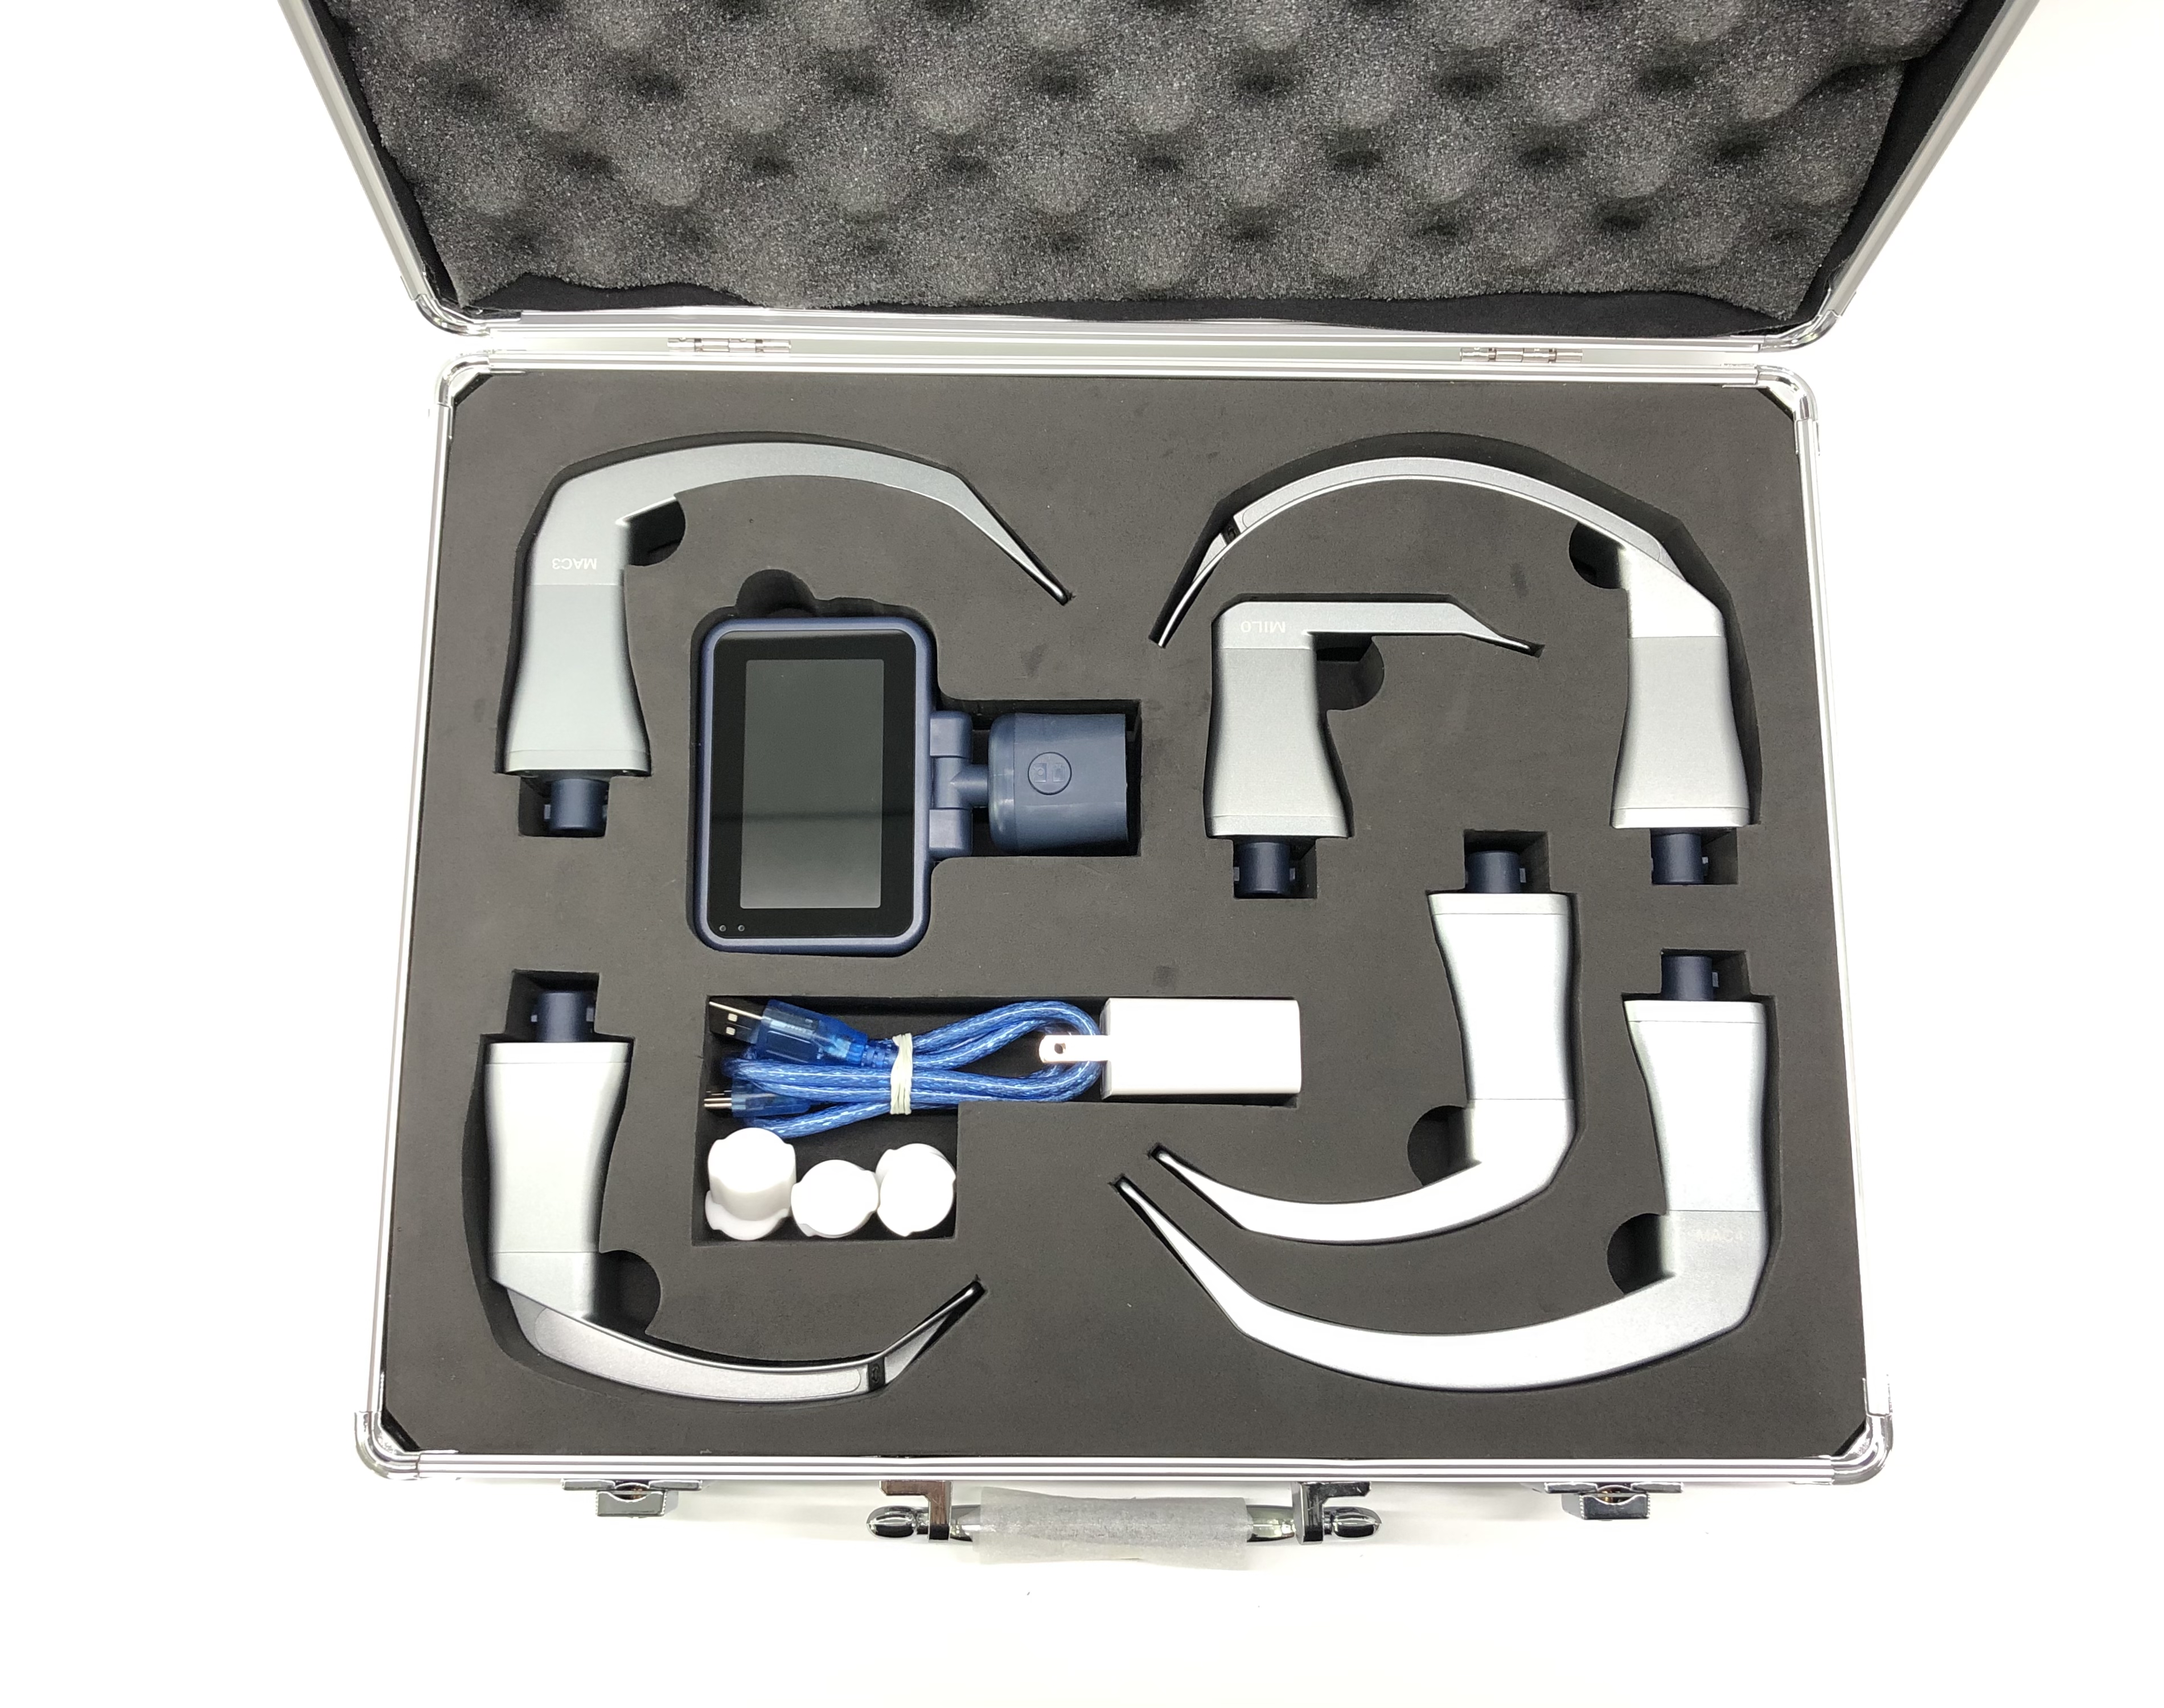 MS-VLA310 Reusable Video Laryngoscope